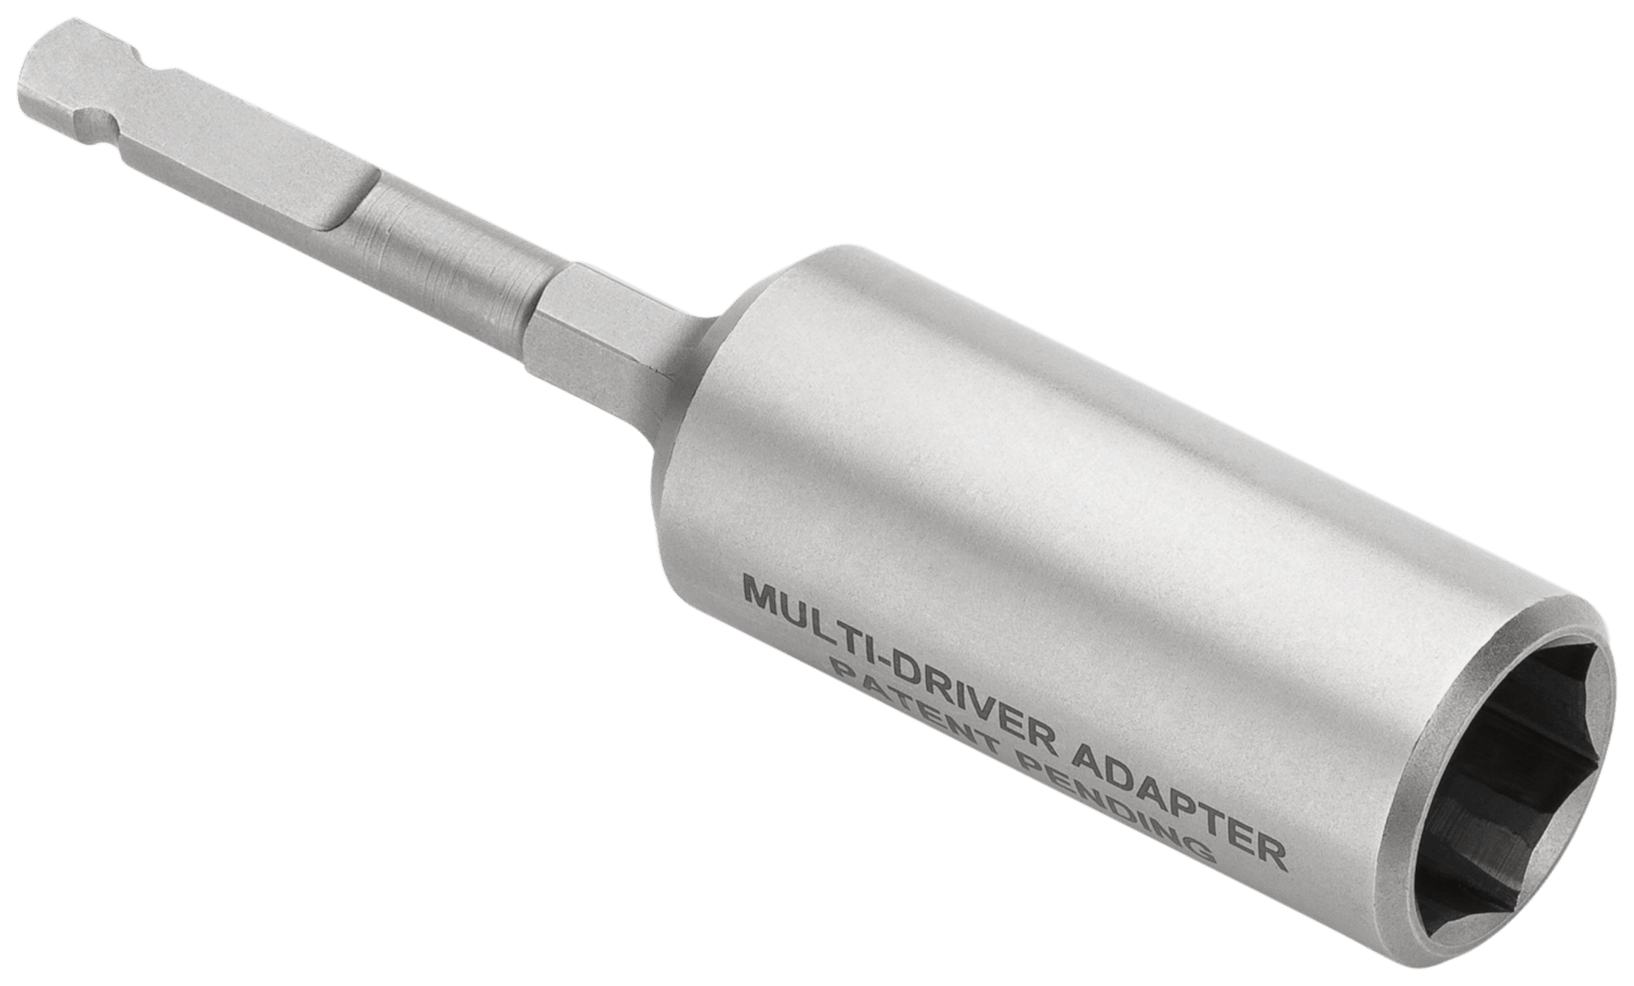 Multi-Driver Adapter